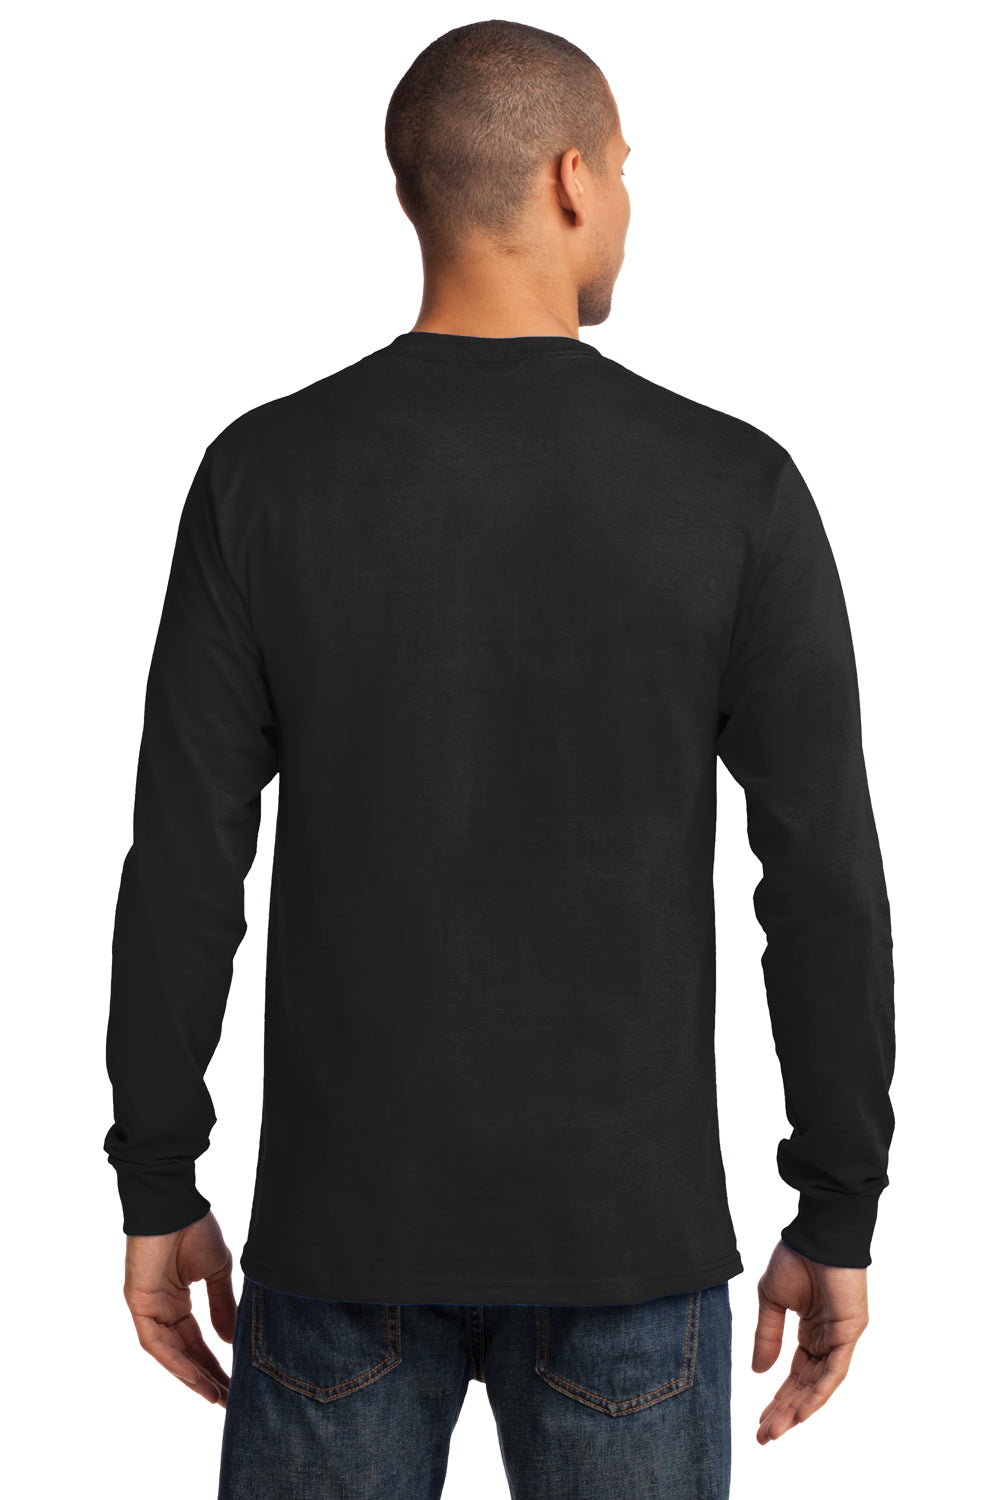 Port & Company PC61LS Mens Essential Long Sleeve Crewneck T-Shirt Black Back